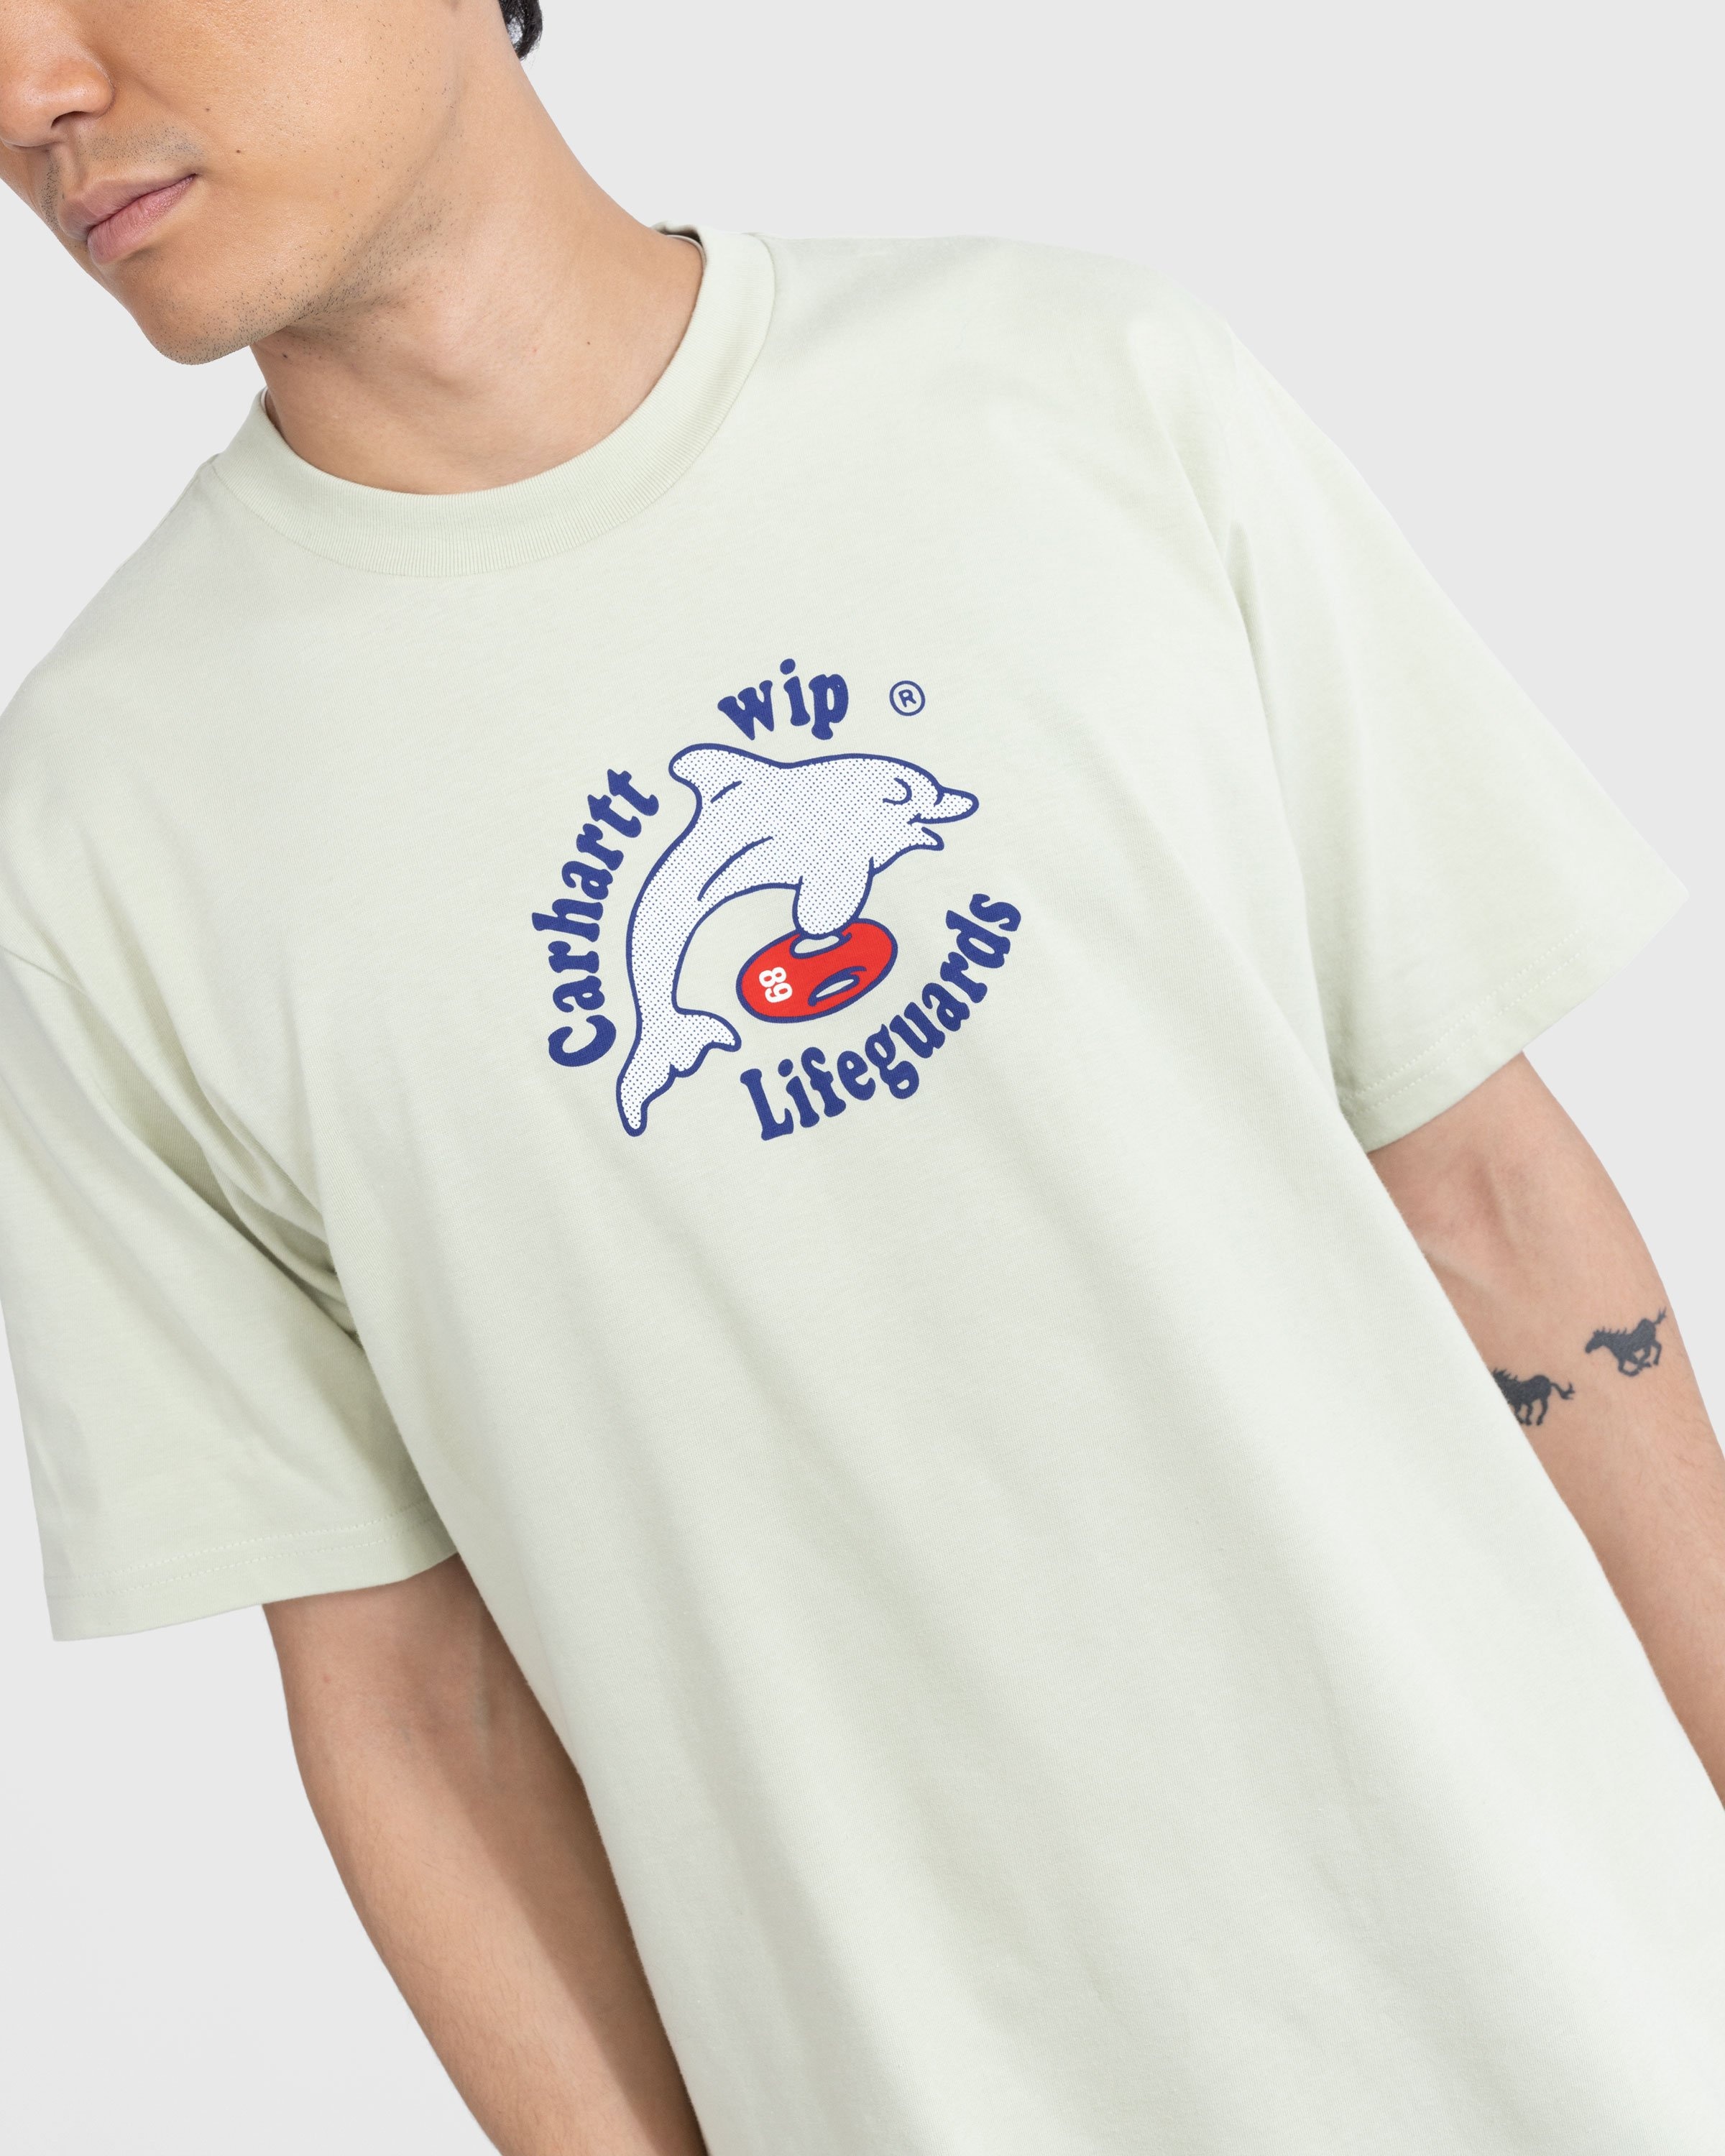 Carhartt WIP – Lifeguards T-Shirt Light Blue - Tops - White - Image 2